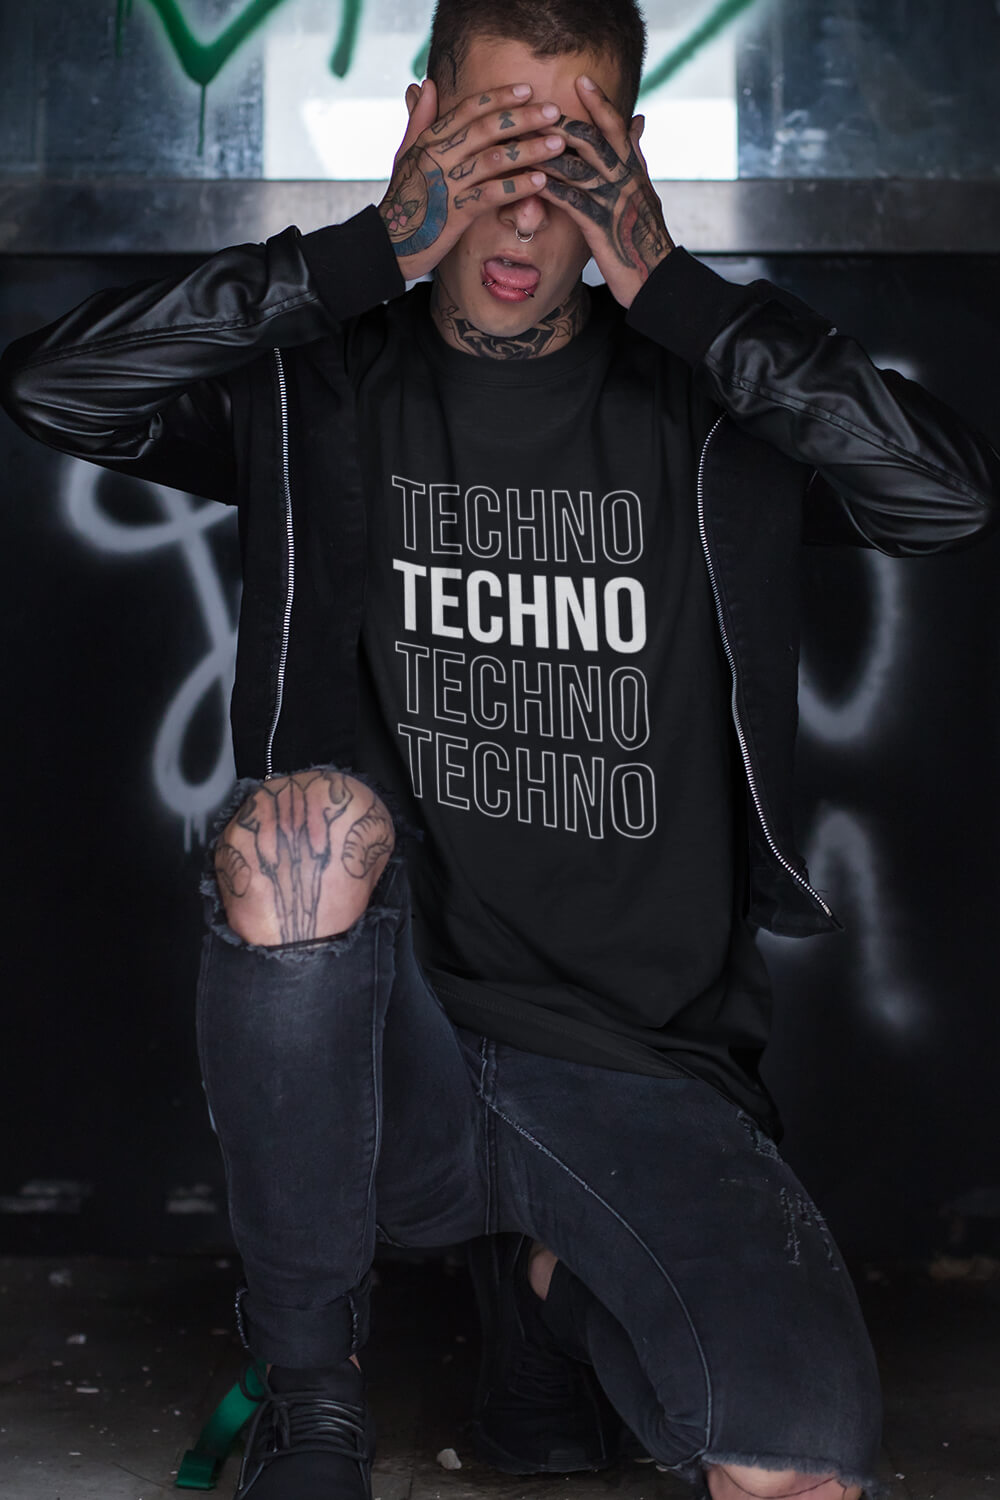 Comprar camisetas para ravers descubre camisetas exclusivas de techno Buy Rave t shirts selection of techno take your best techno outfit